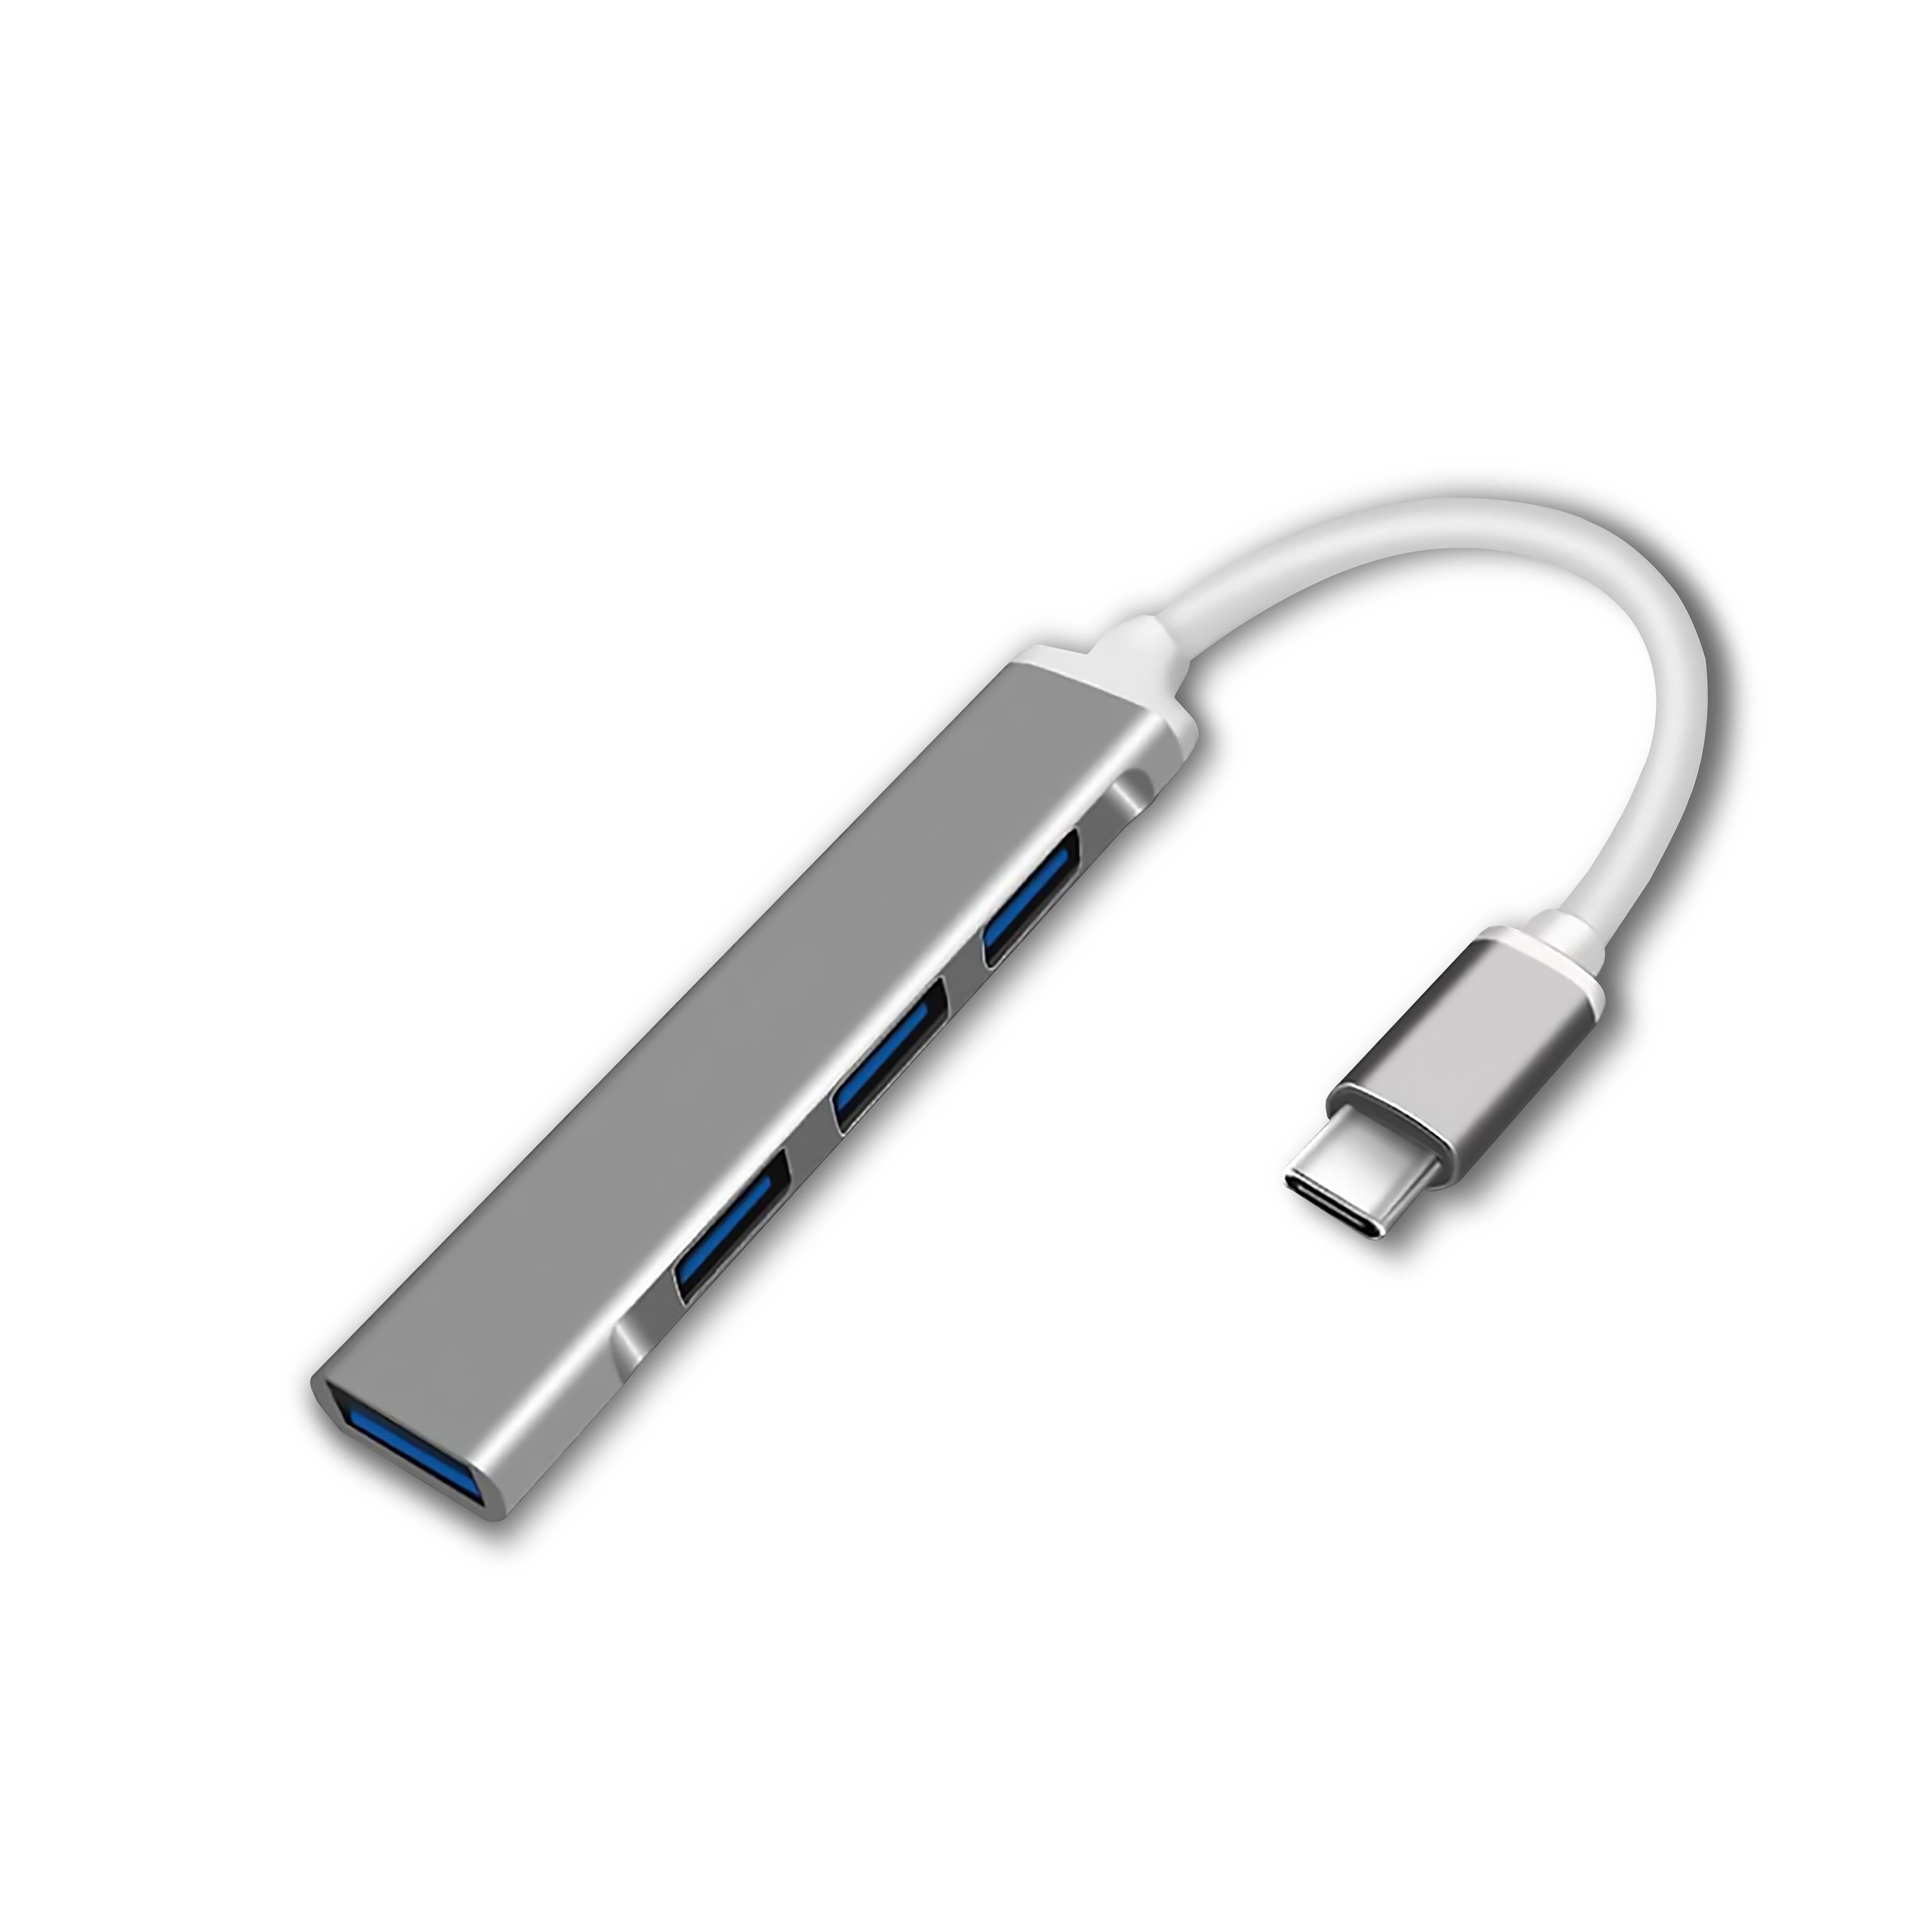 MYTT - MYTT - Adaptador USB tipo C macho, 4 puertos con 1 USB 3.0 y 3 USB 2.0. 100% funcional, alta durabilidad, no se quema